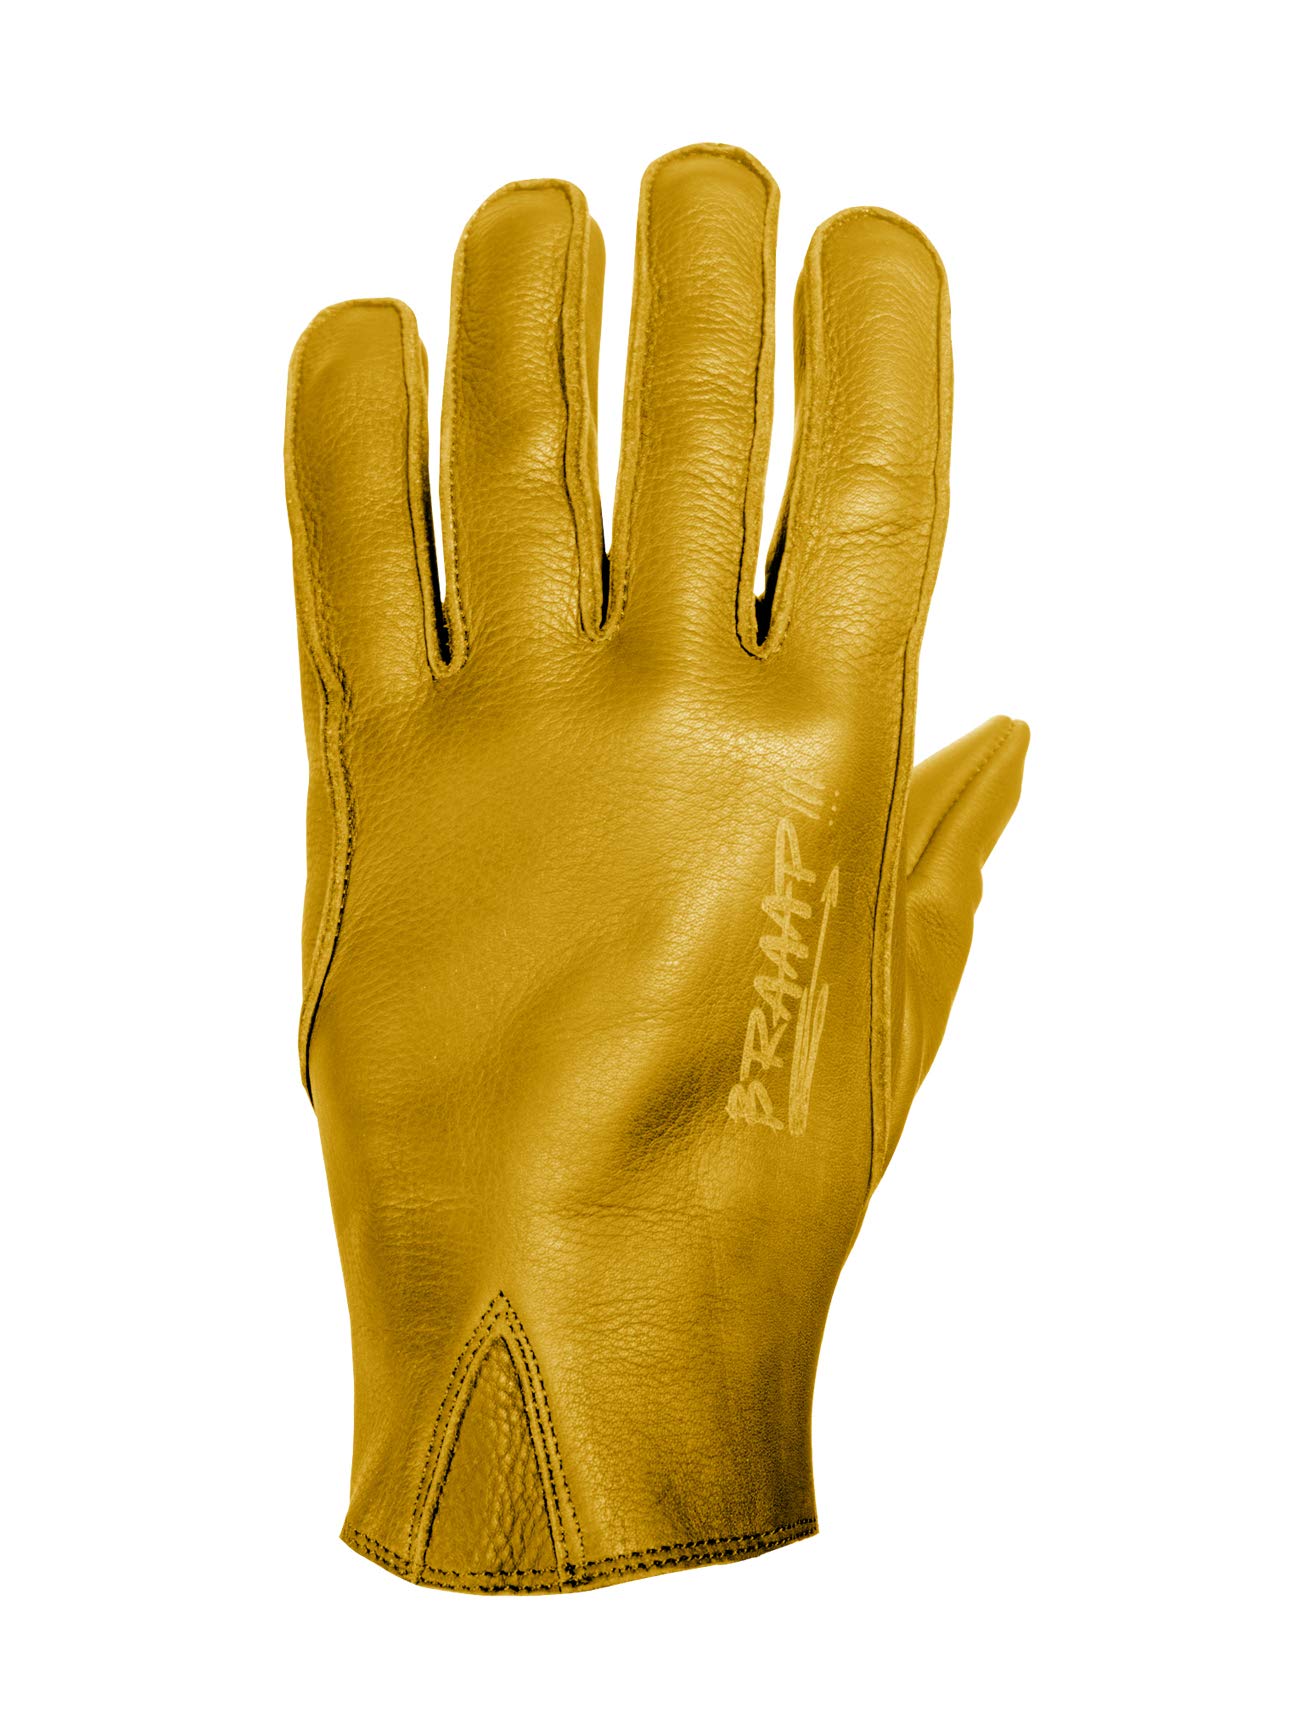 John Doe Motorrad Handschuh Ironhead | Handschuh aus Rindsleder | Atmungsaktiv, JDG7017-3XL, ironehead yellow, 3xl von John Doe